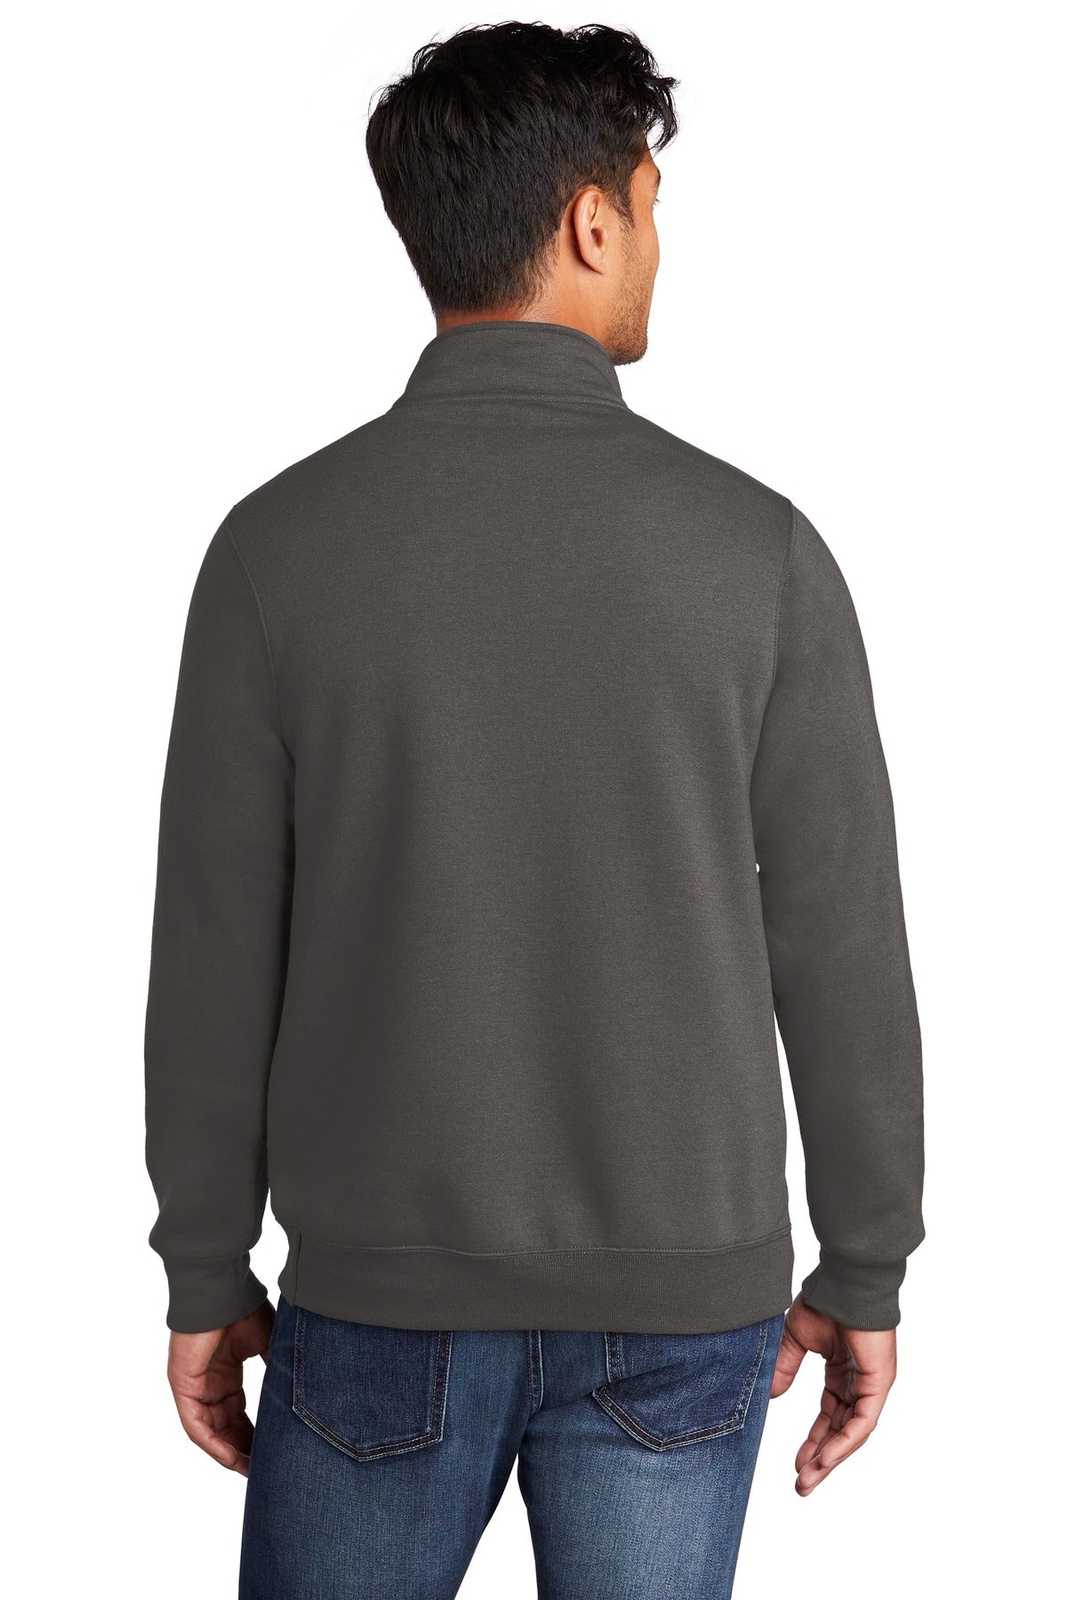 Port & Company PC78Q Core Fleece 1/4-Zip Pullover Sweatshirt - Charcoal - HIT a Double - 1